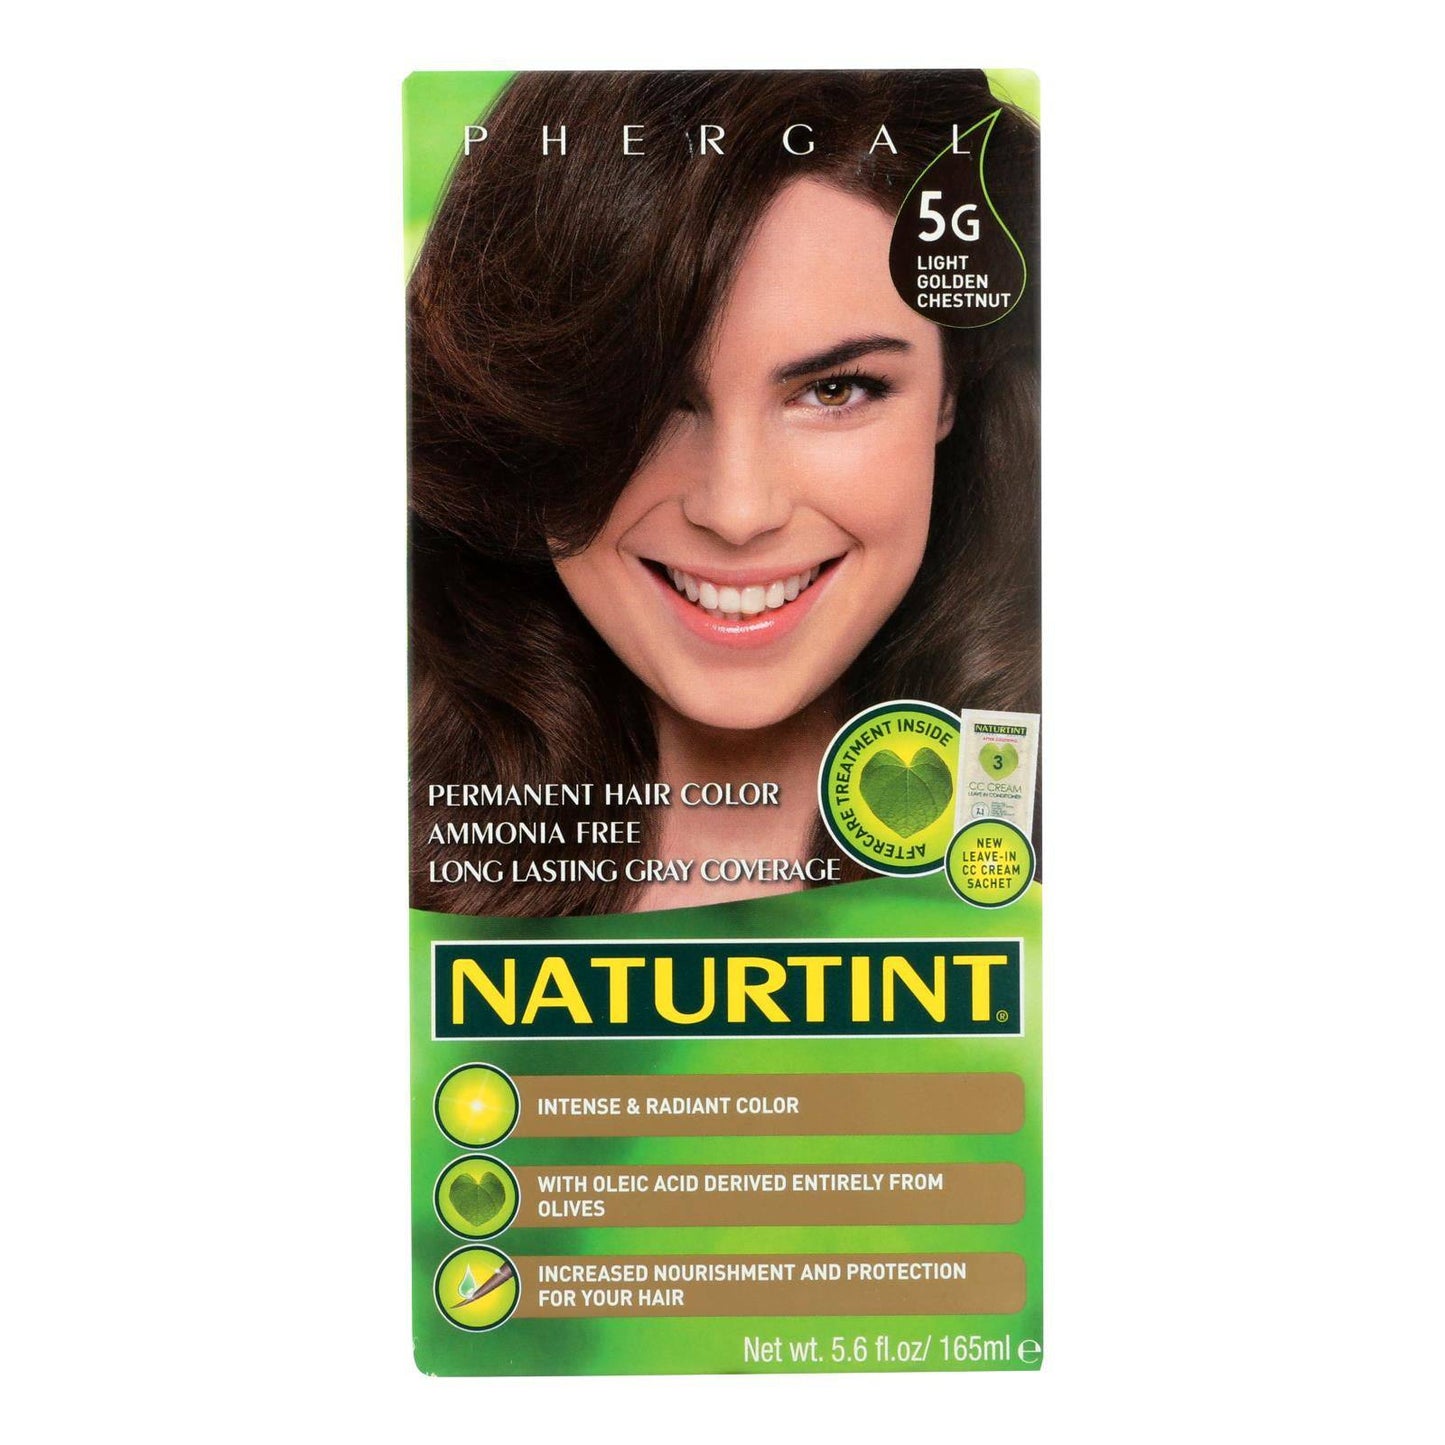 Buy Naturtint Hair Color - Permanent - 5g - Light Golden Chestnut - 5.28 Oz  at OnlyNaturals.us